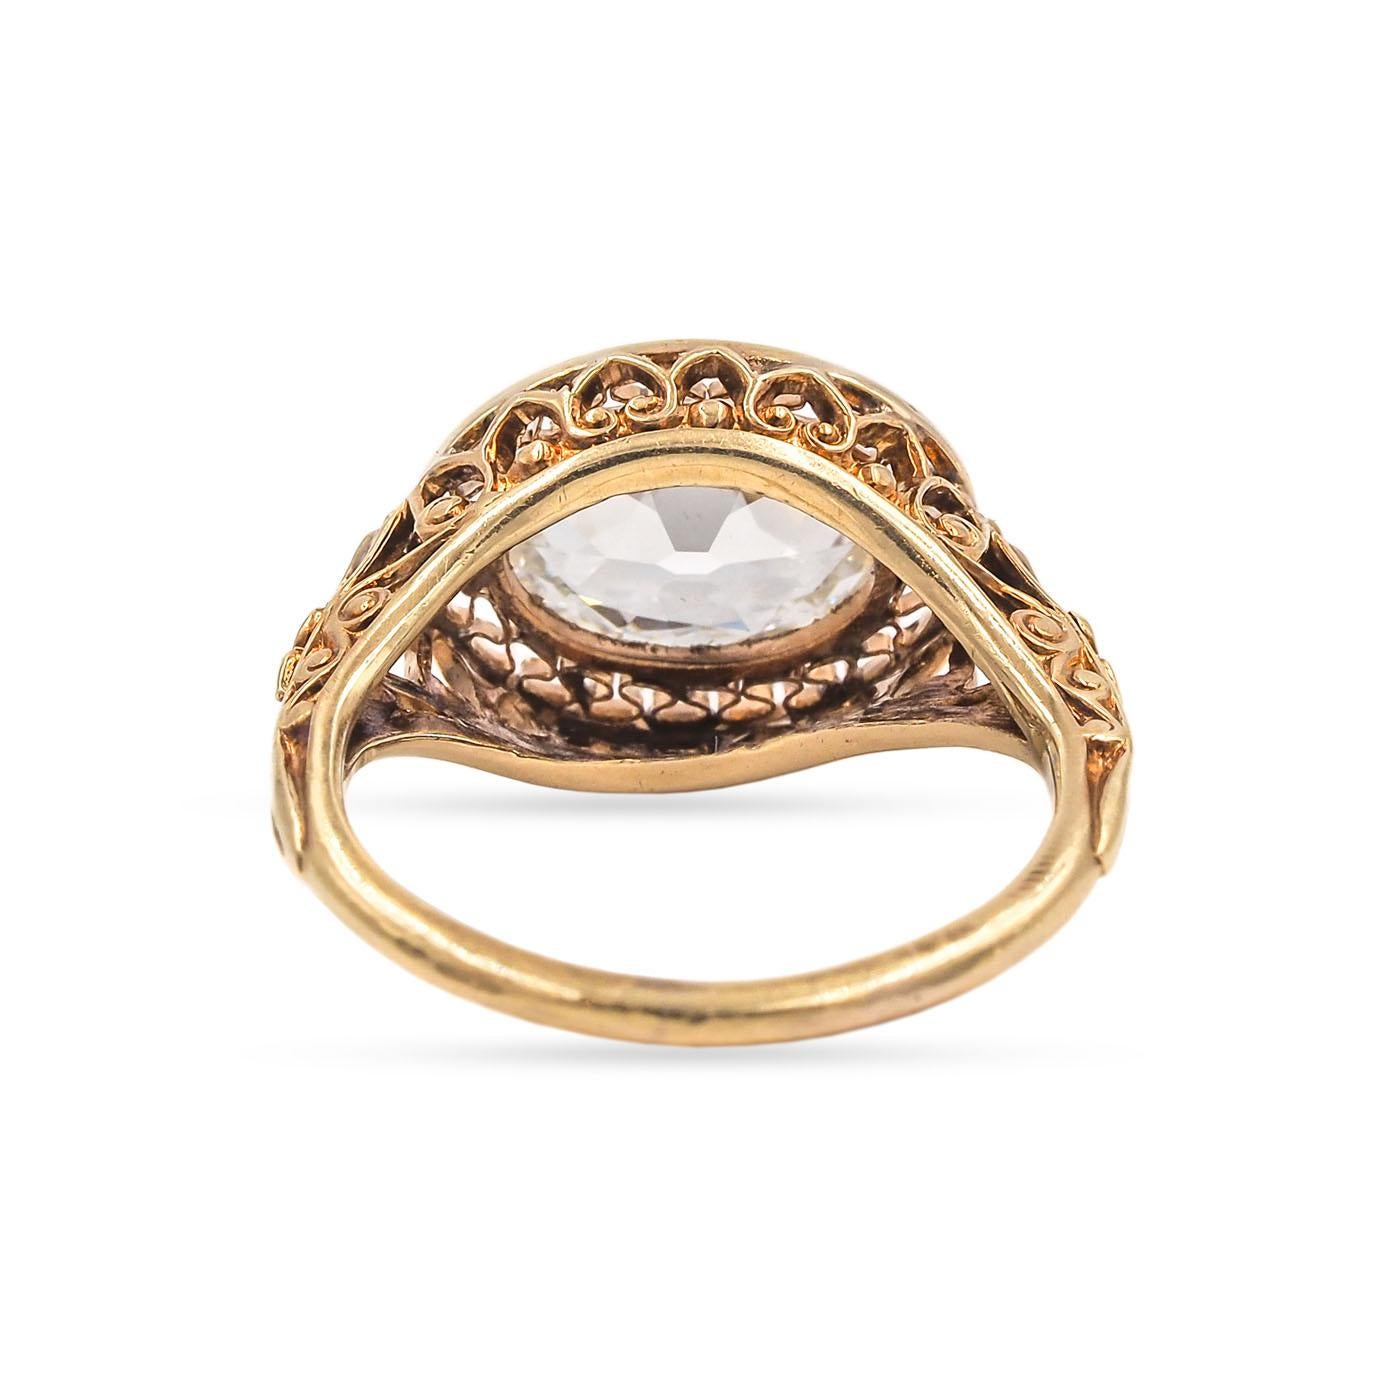 Edwardian Antique 1.03 Carat Oval Cut Diamond Engagement Ring